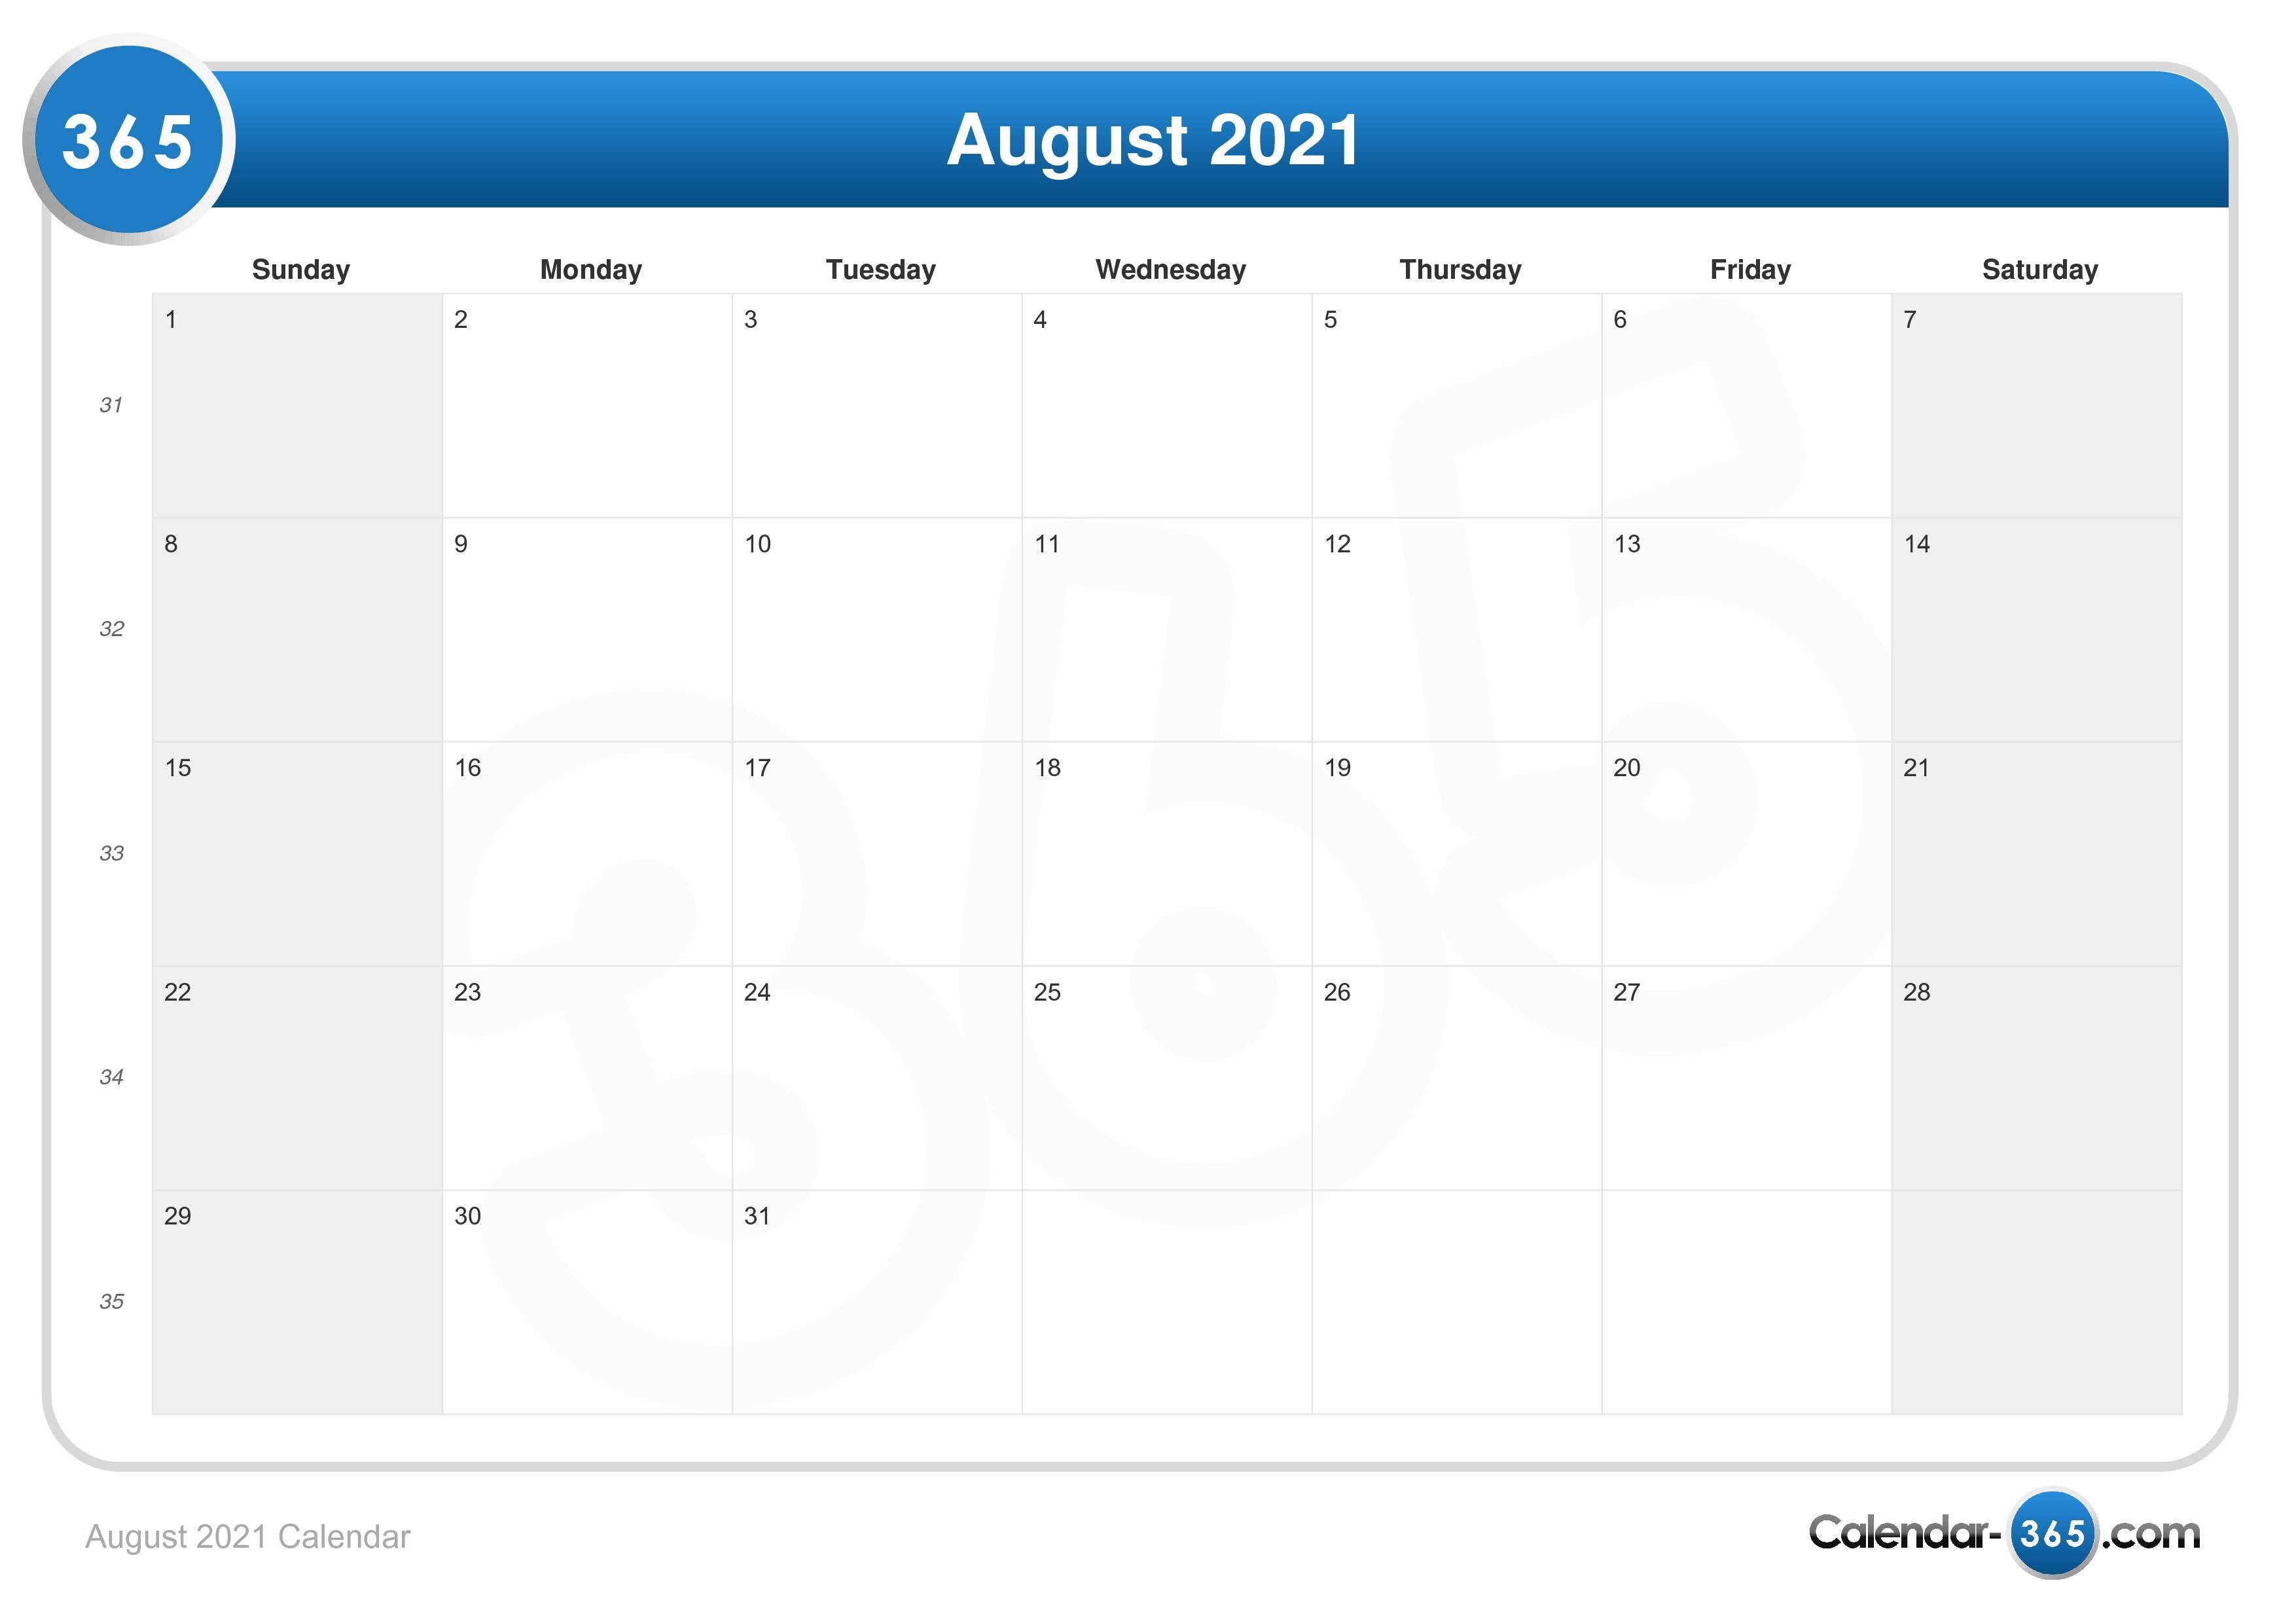 August 2021 11 11 August